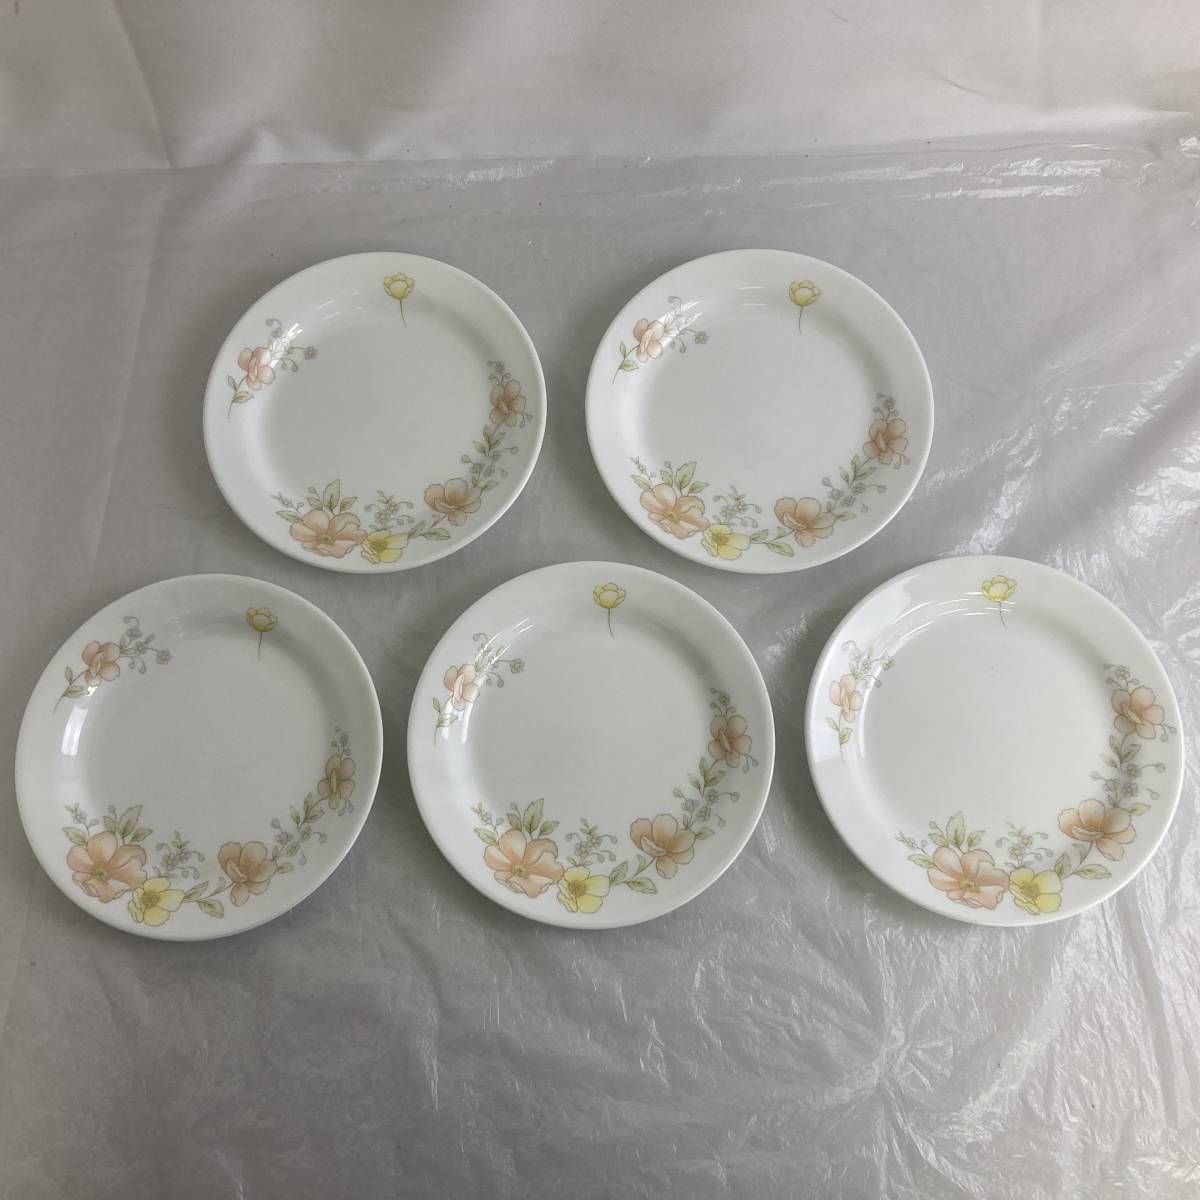 CORELLEkore- Lupin тарелка 5 листов маленькая тарелка круг тарелка брать . тарелка европейская посуда посуда цветочный принт USA